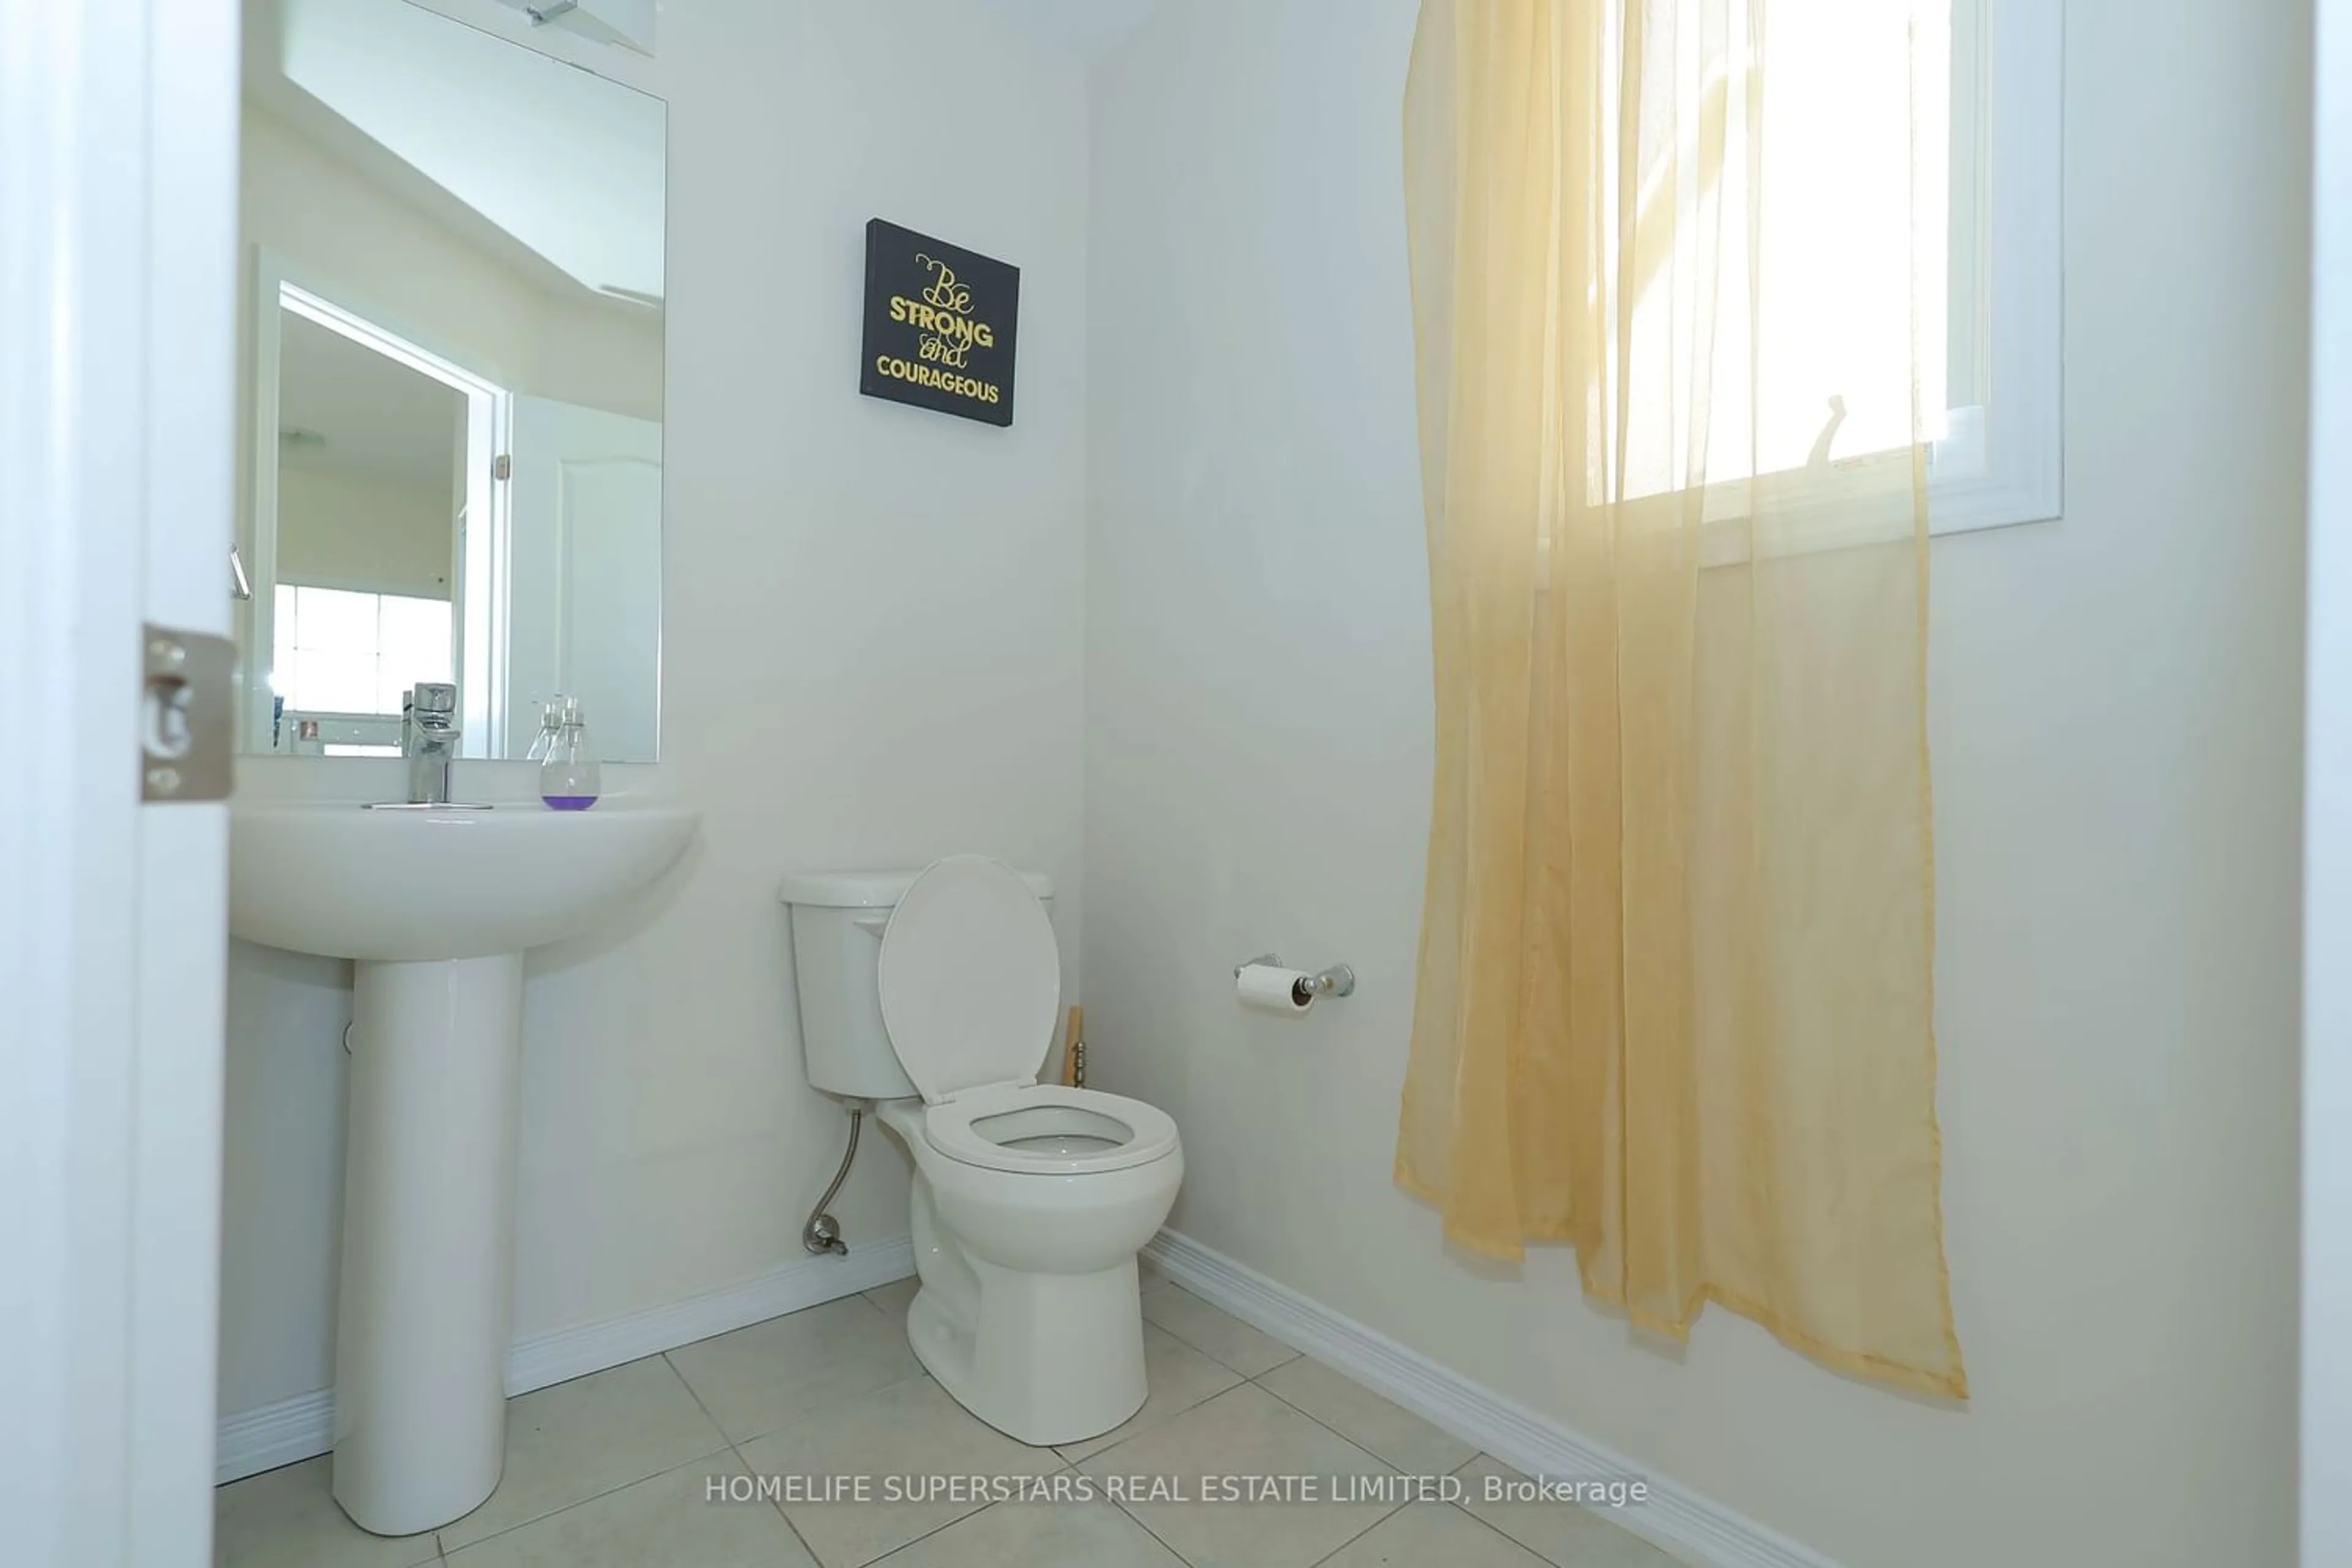 Standard bathroom for 8811 Chickory Tr, Niagara Falls Ontario L2H 2Y6